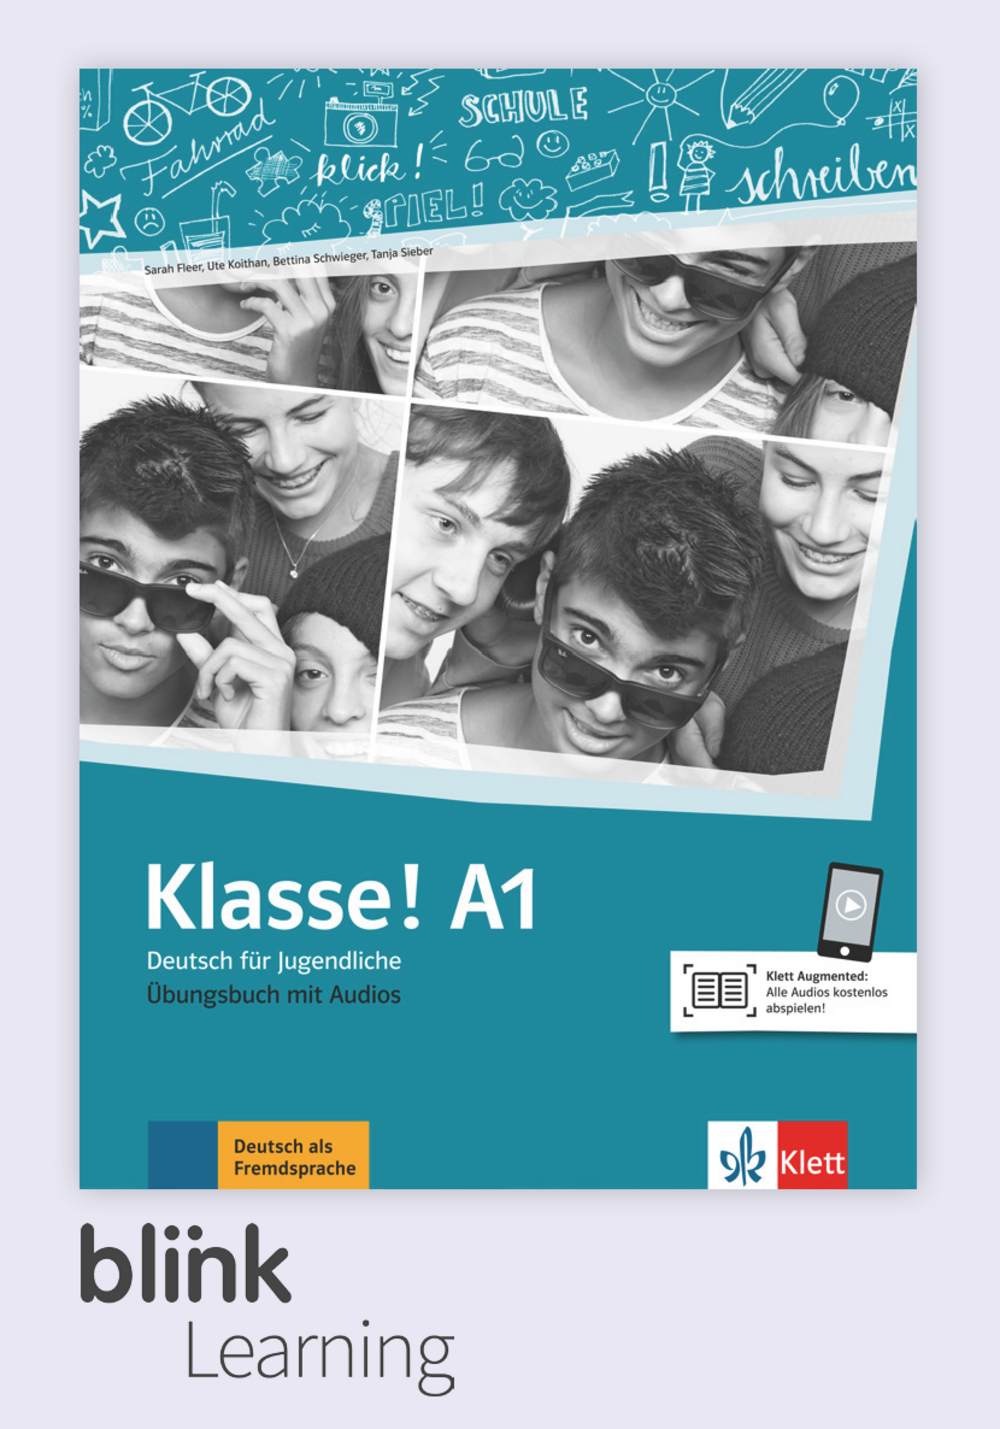 Klasse! A1 Digital Ubungsbuch fur Unterrichtende / Цифровая рабочая тетрадь для учителя